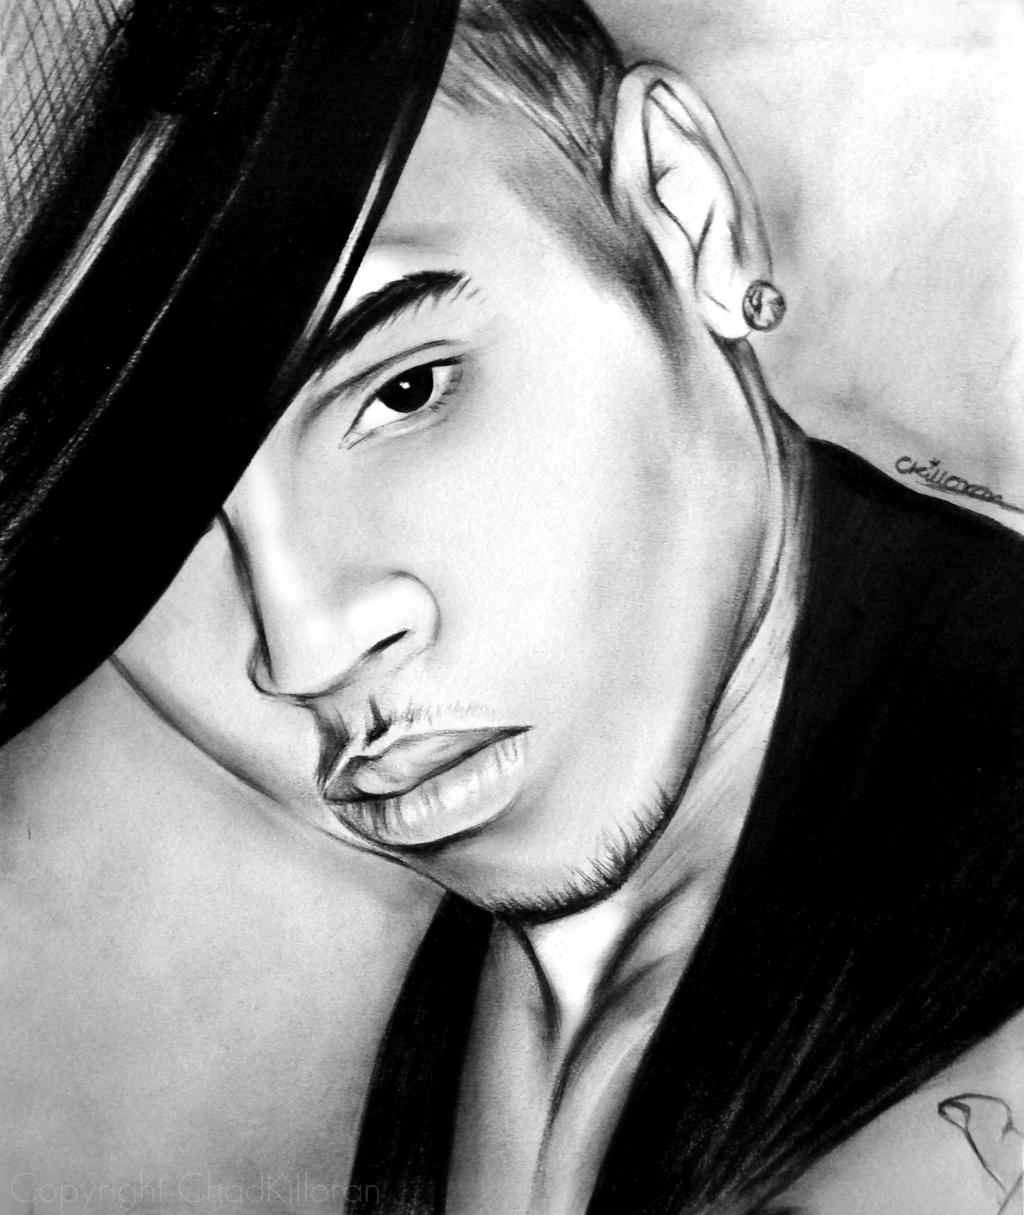 Chris Brown by ChadKilloran on deviantART